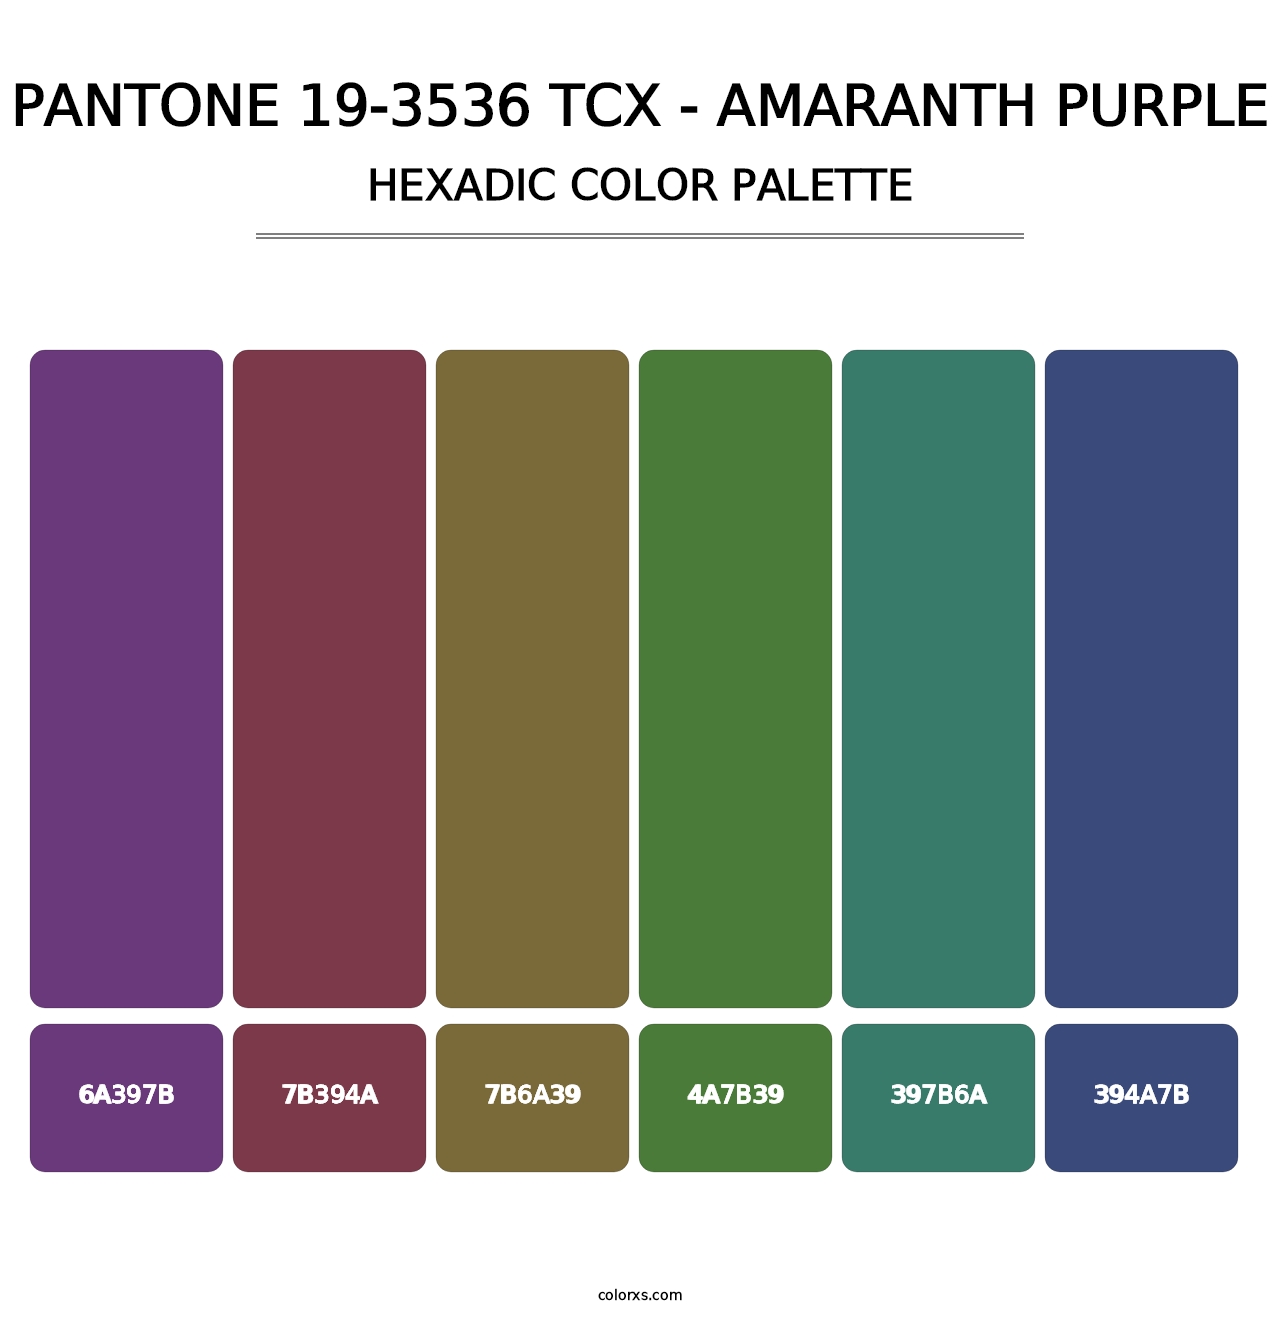 PANTONE 19-3536 TCX - Amaranth Purple - Hexadic Color Palette